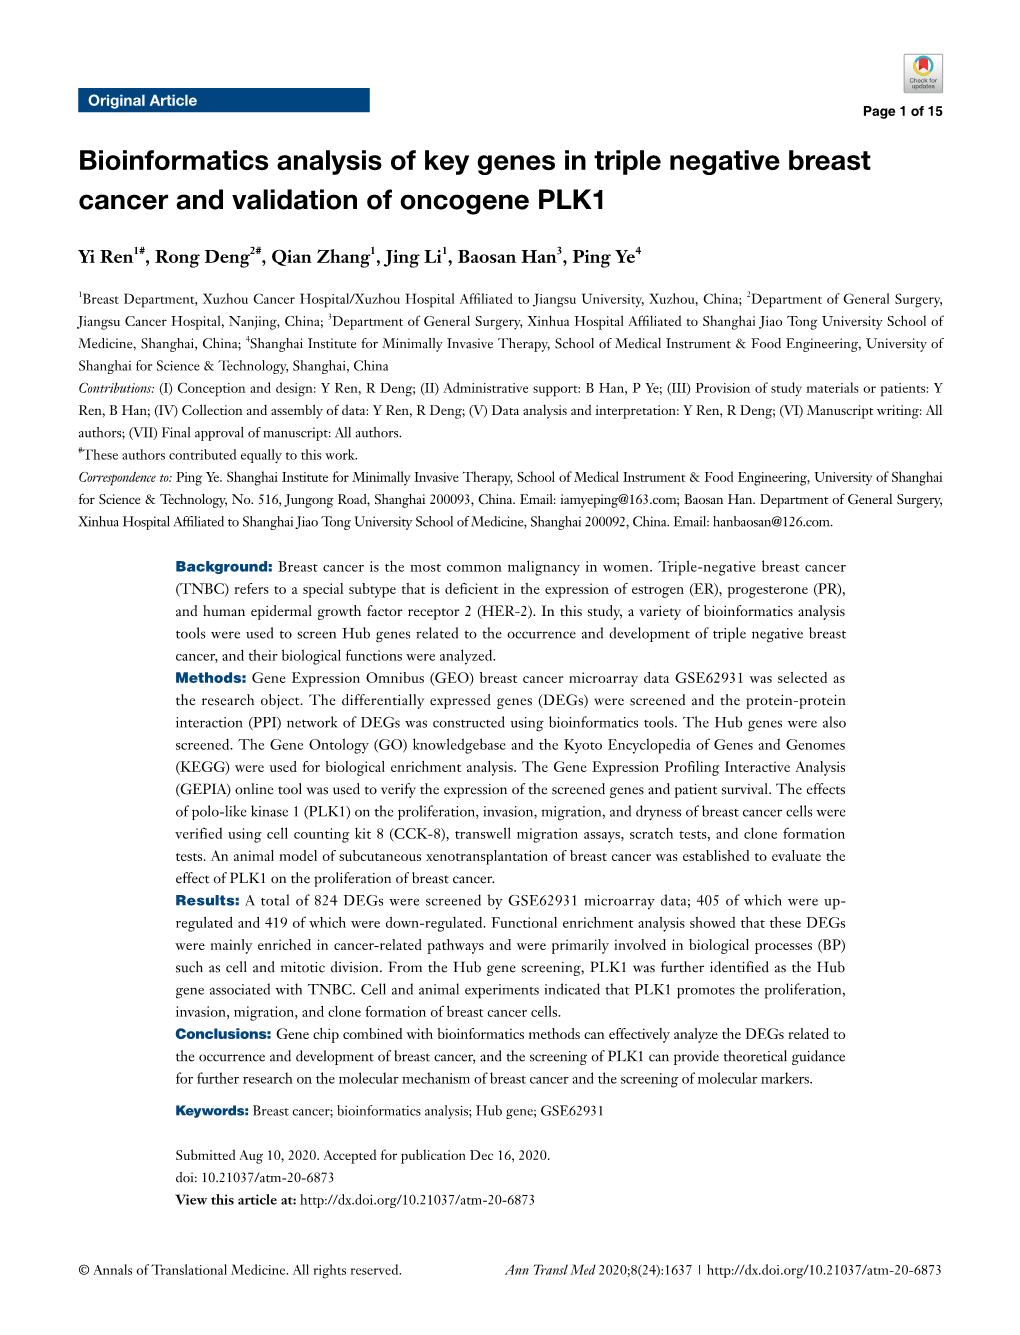 Bioinformatics Analysis of Key Genes in Triple Negative Breast Cancer and Validation of Oncogene PLK1